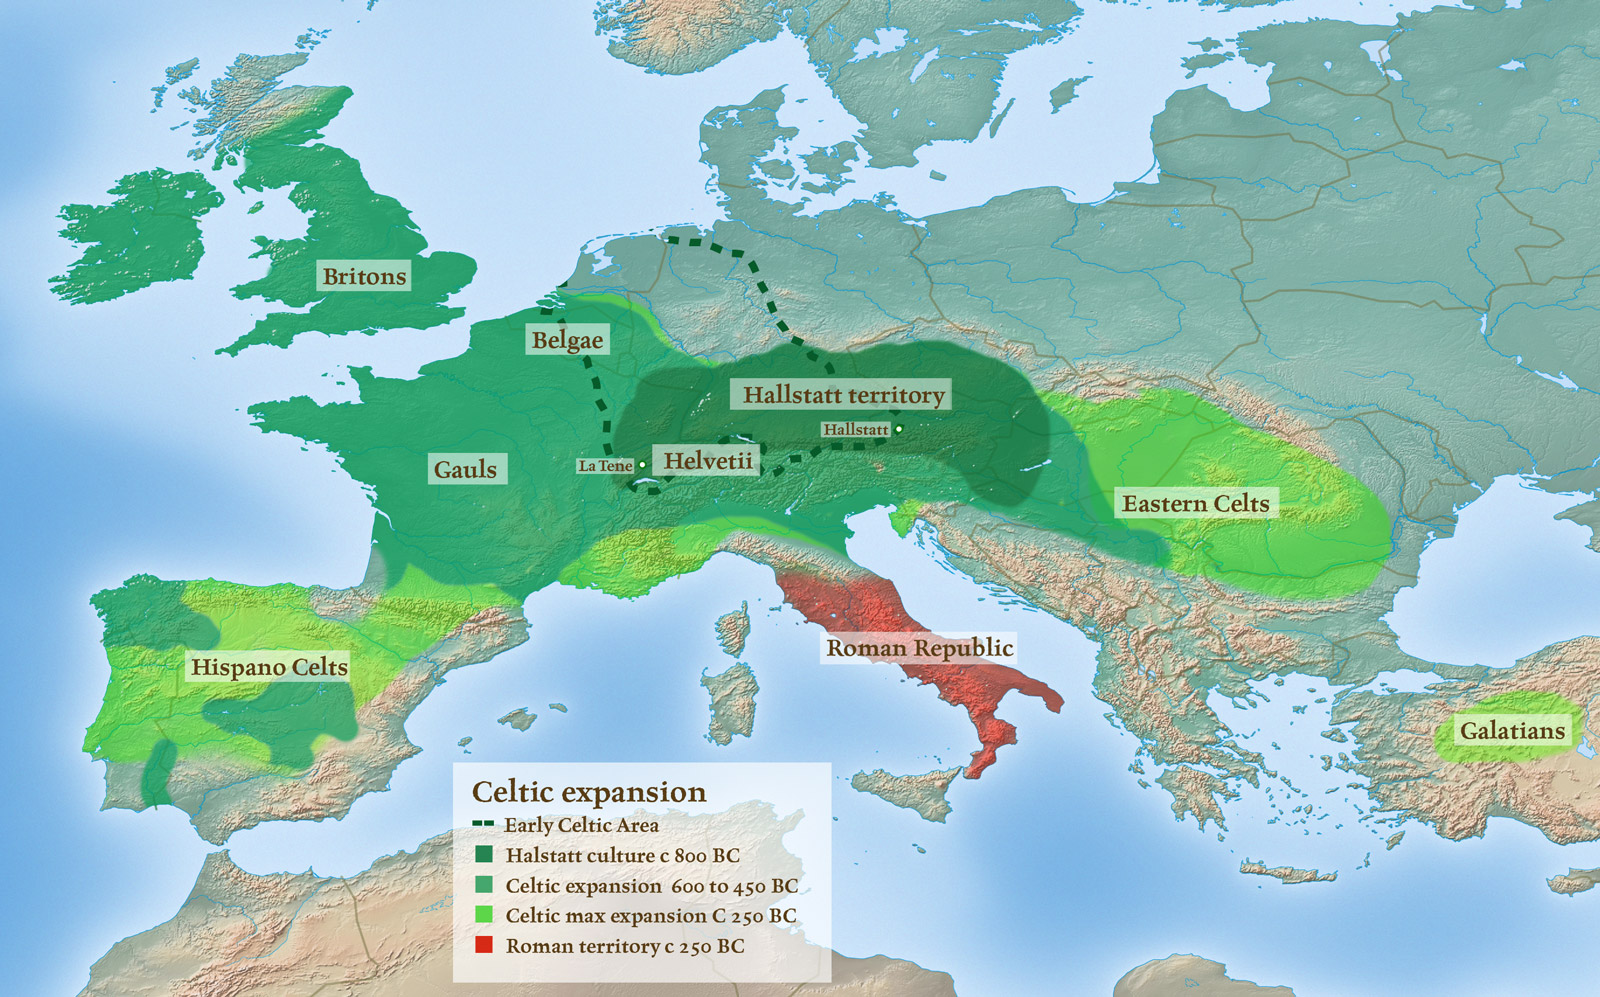 17-Celtic-Expansion-3rd-century-BC.jpg